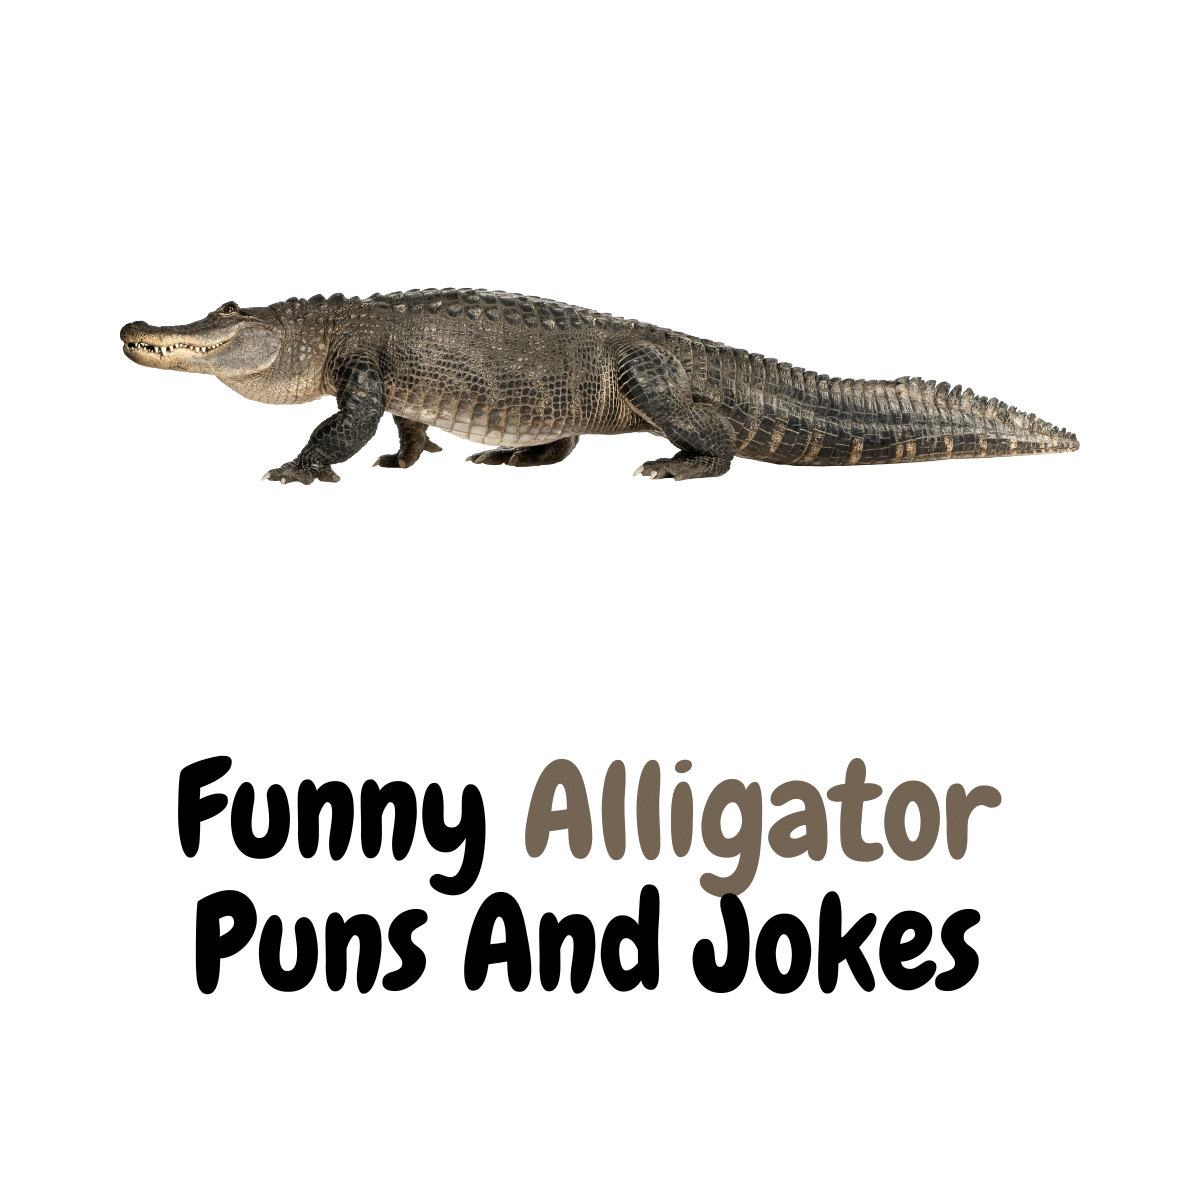 Funy Crocodile